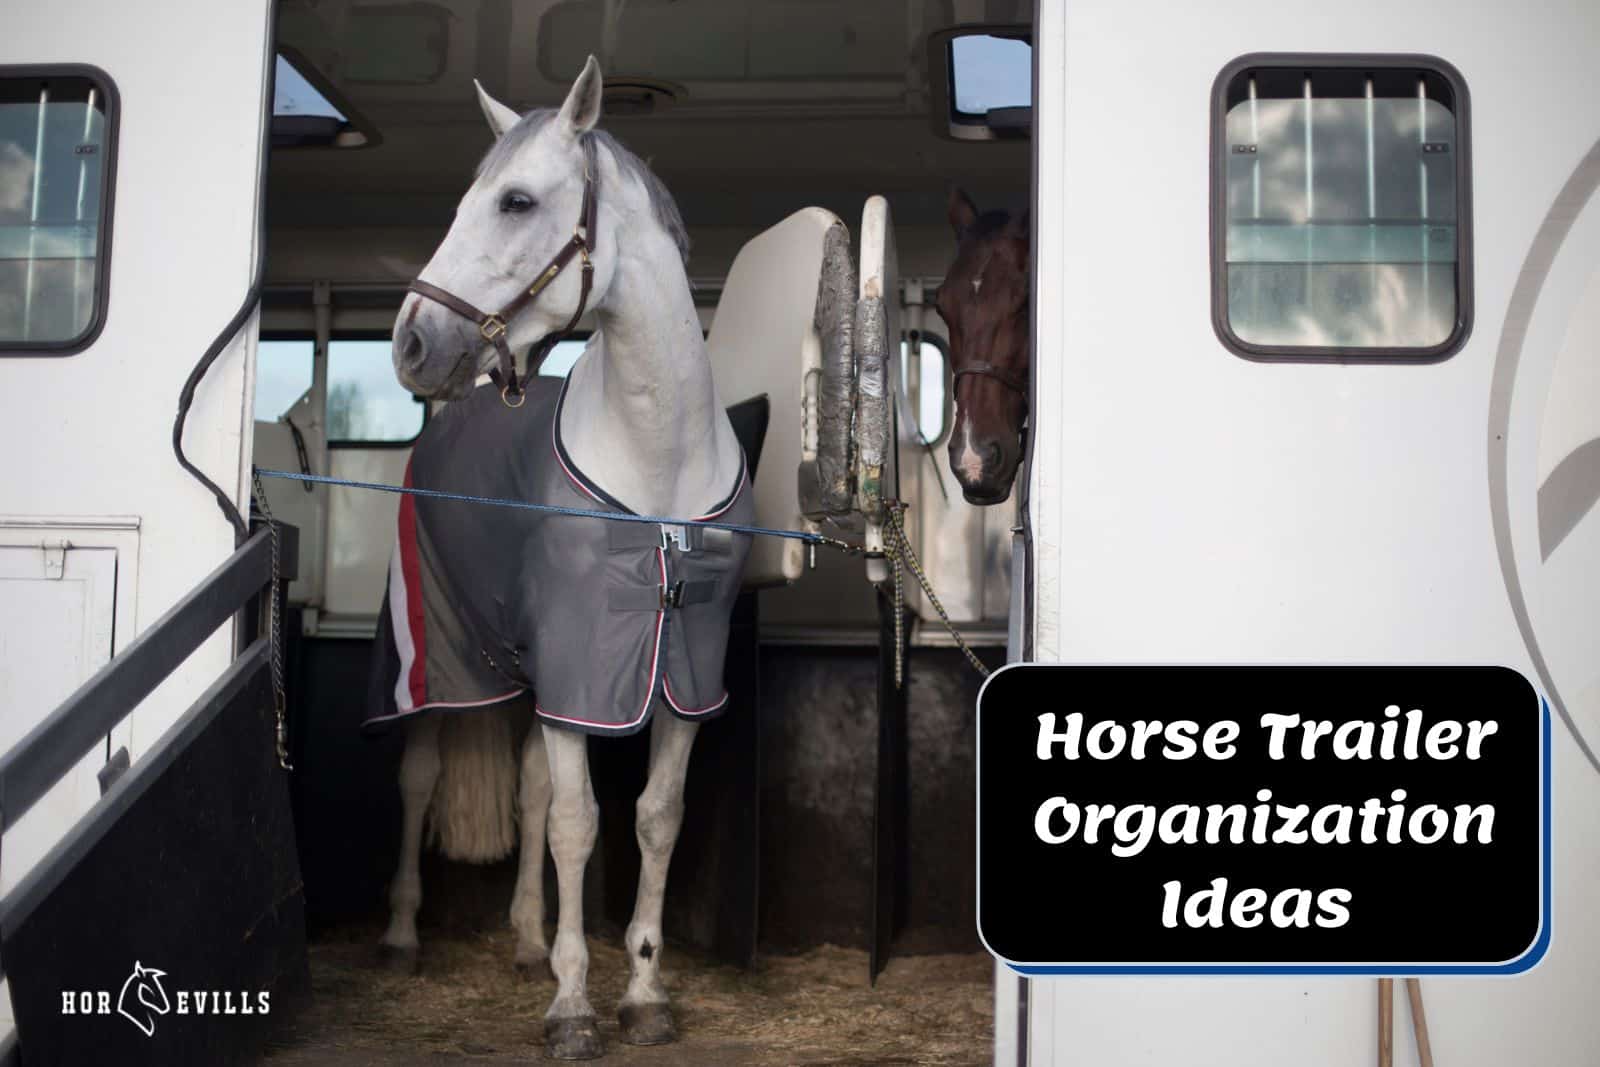 beautiful horse inside a trailer beside horse trailer organization ideas signage